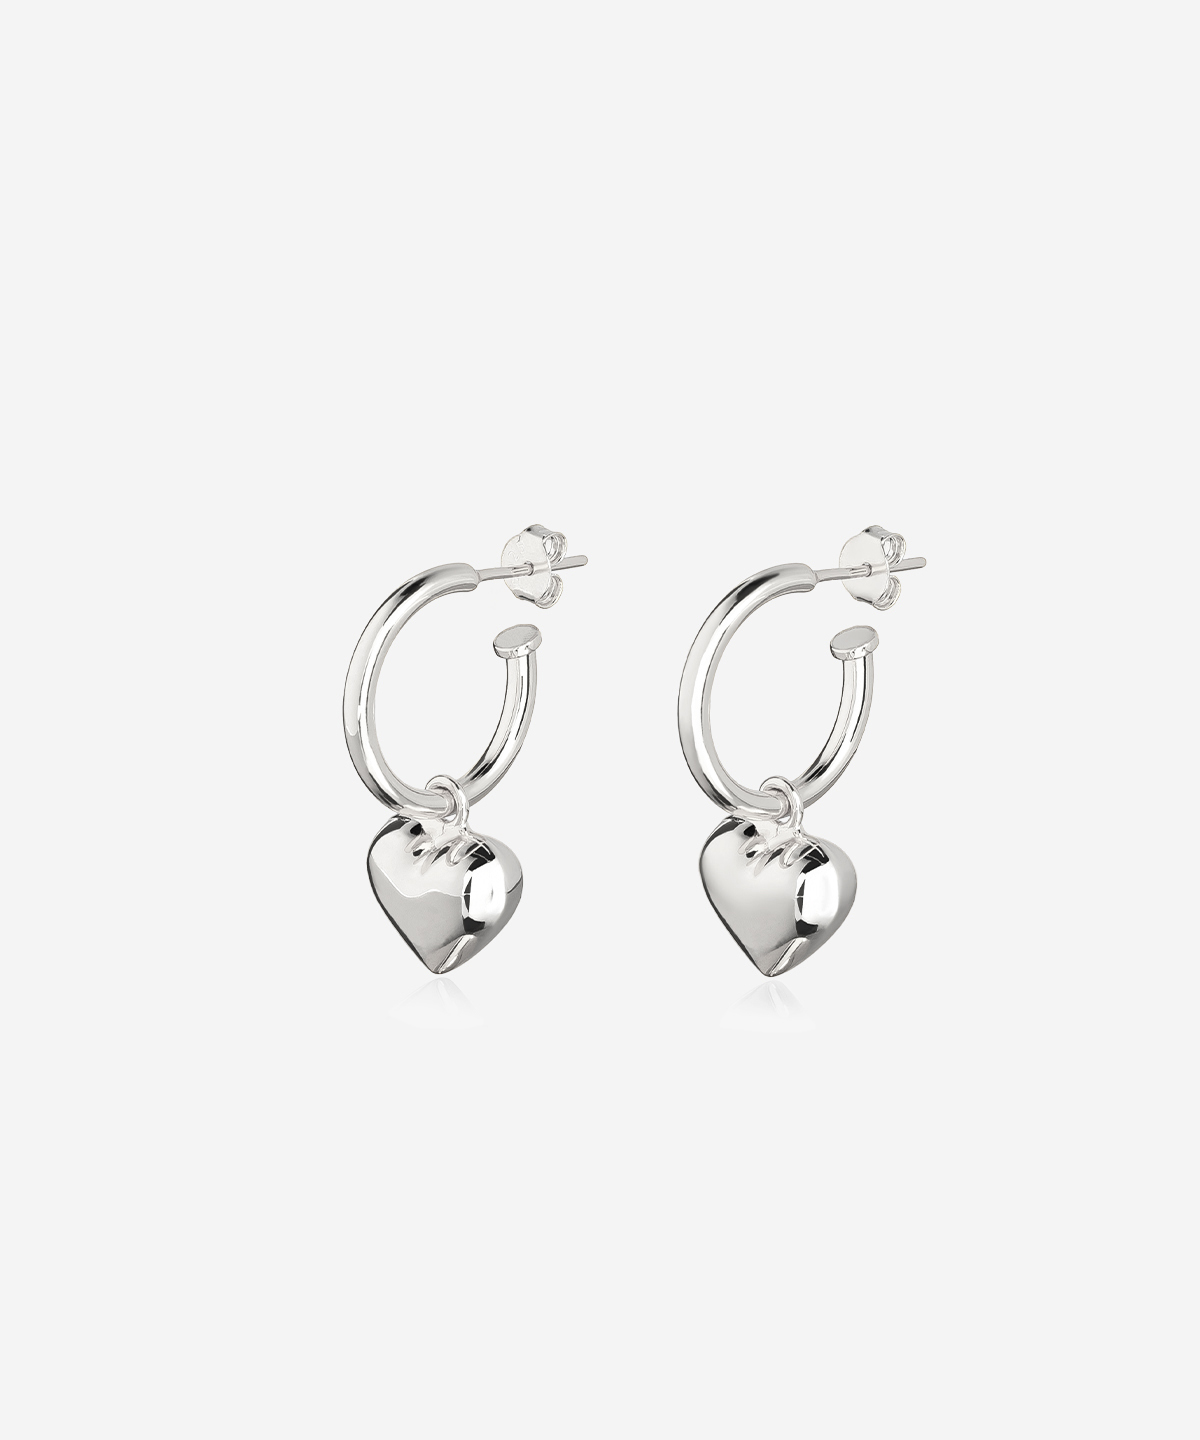 Amore silver earrings